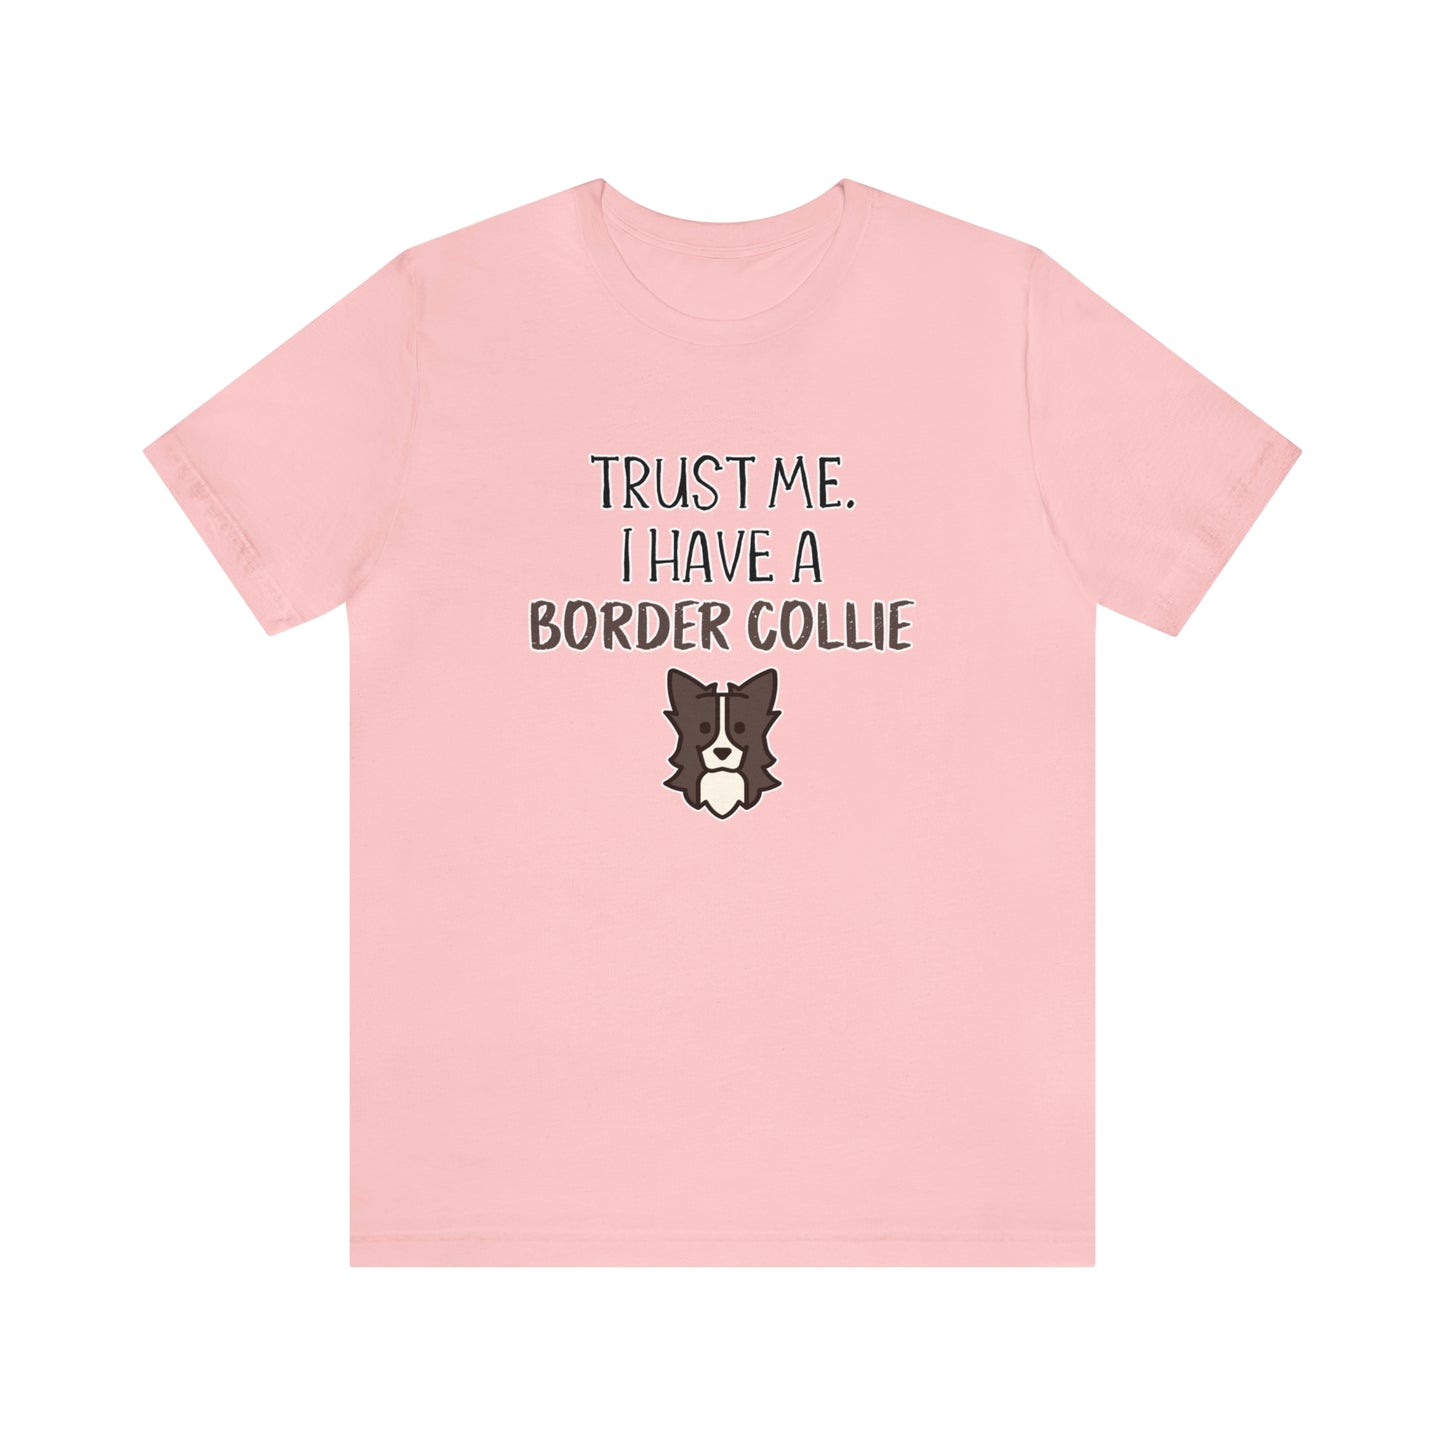 border collie t shirt pink